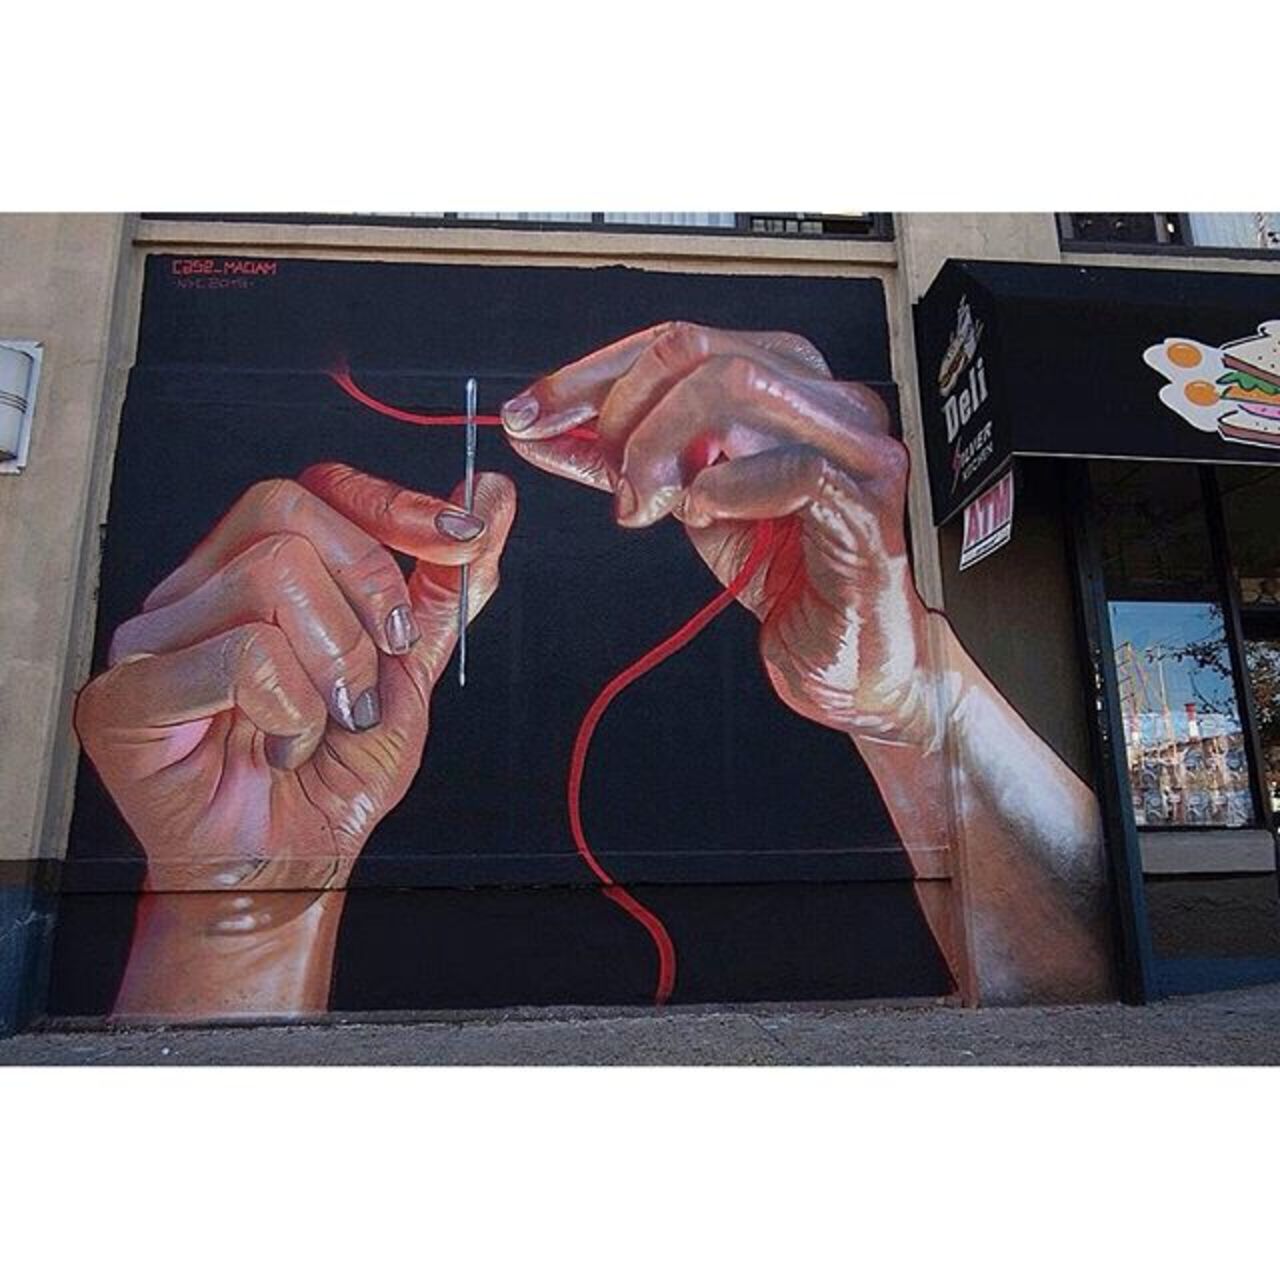 Case #streetart #urbanart #graffiti https://t.co/brjk6HQi9S